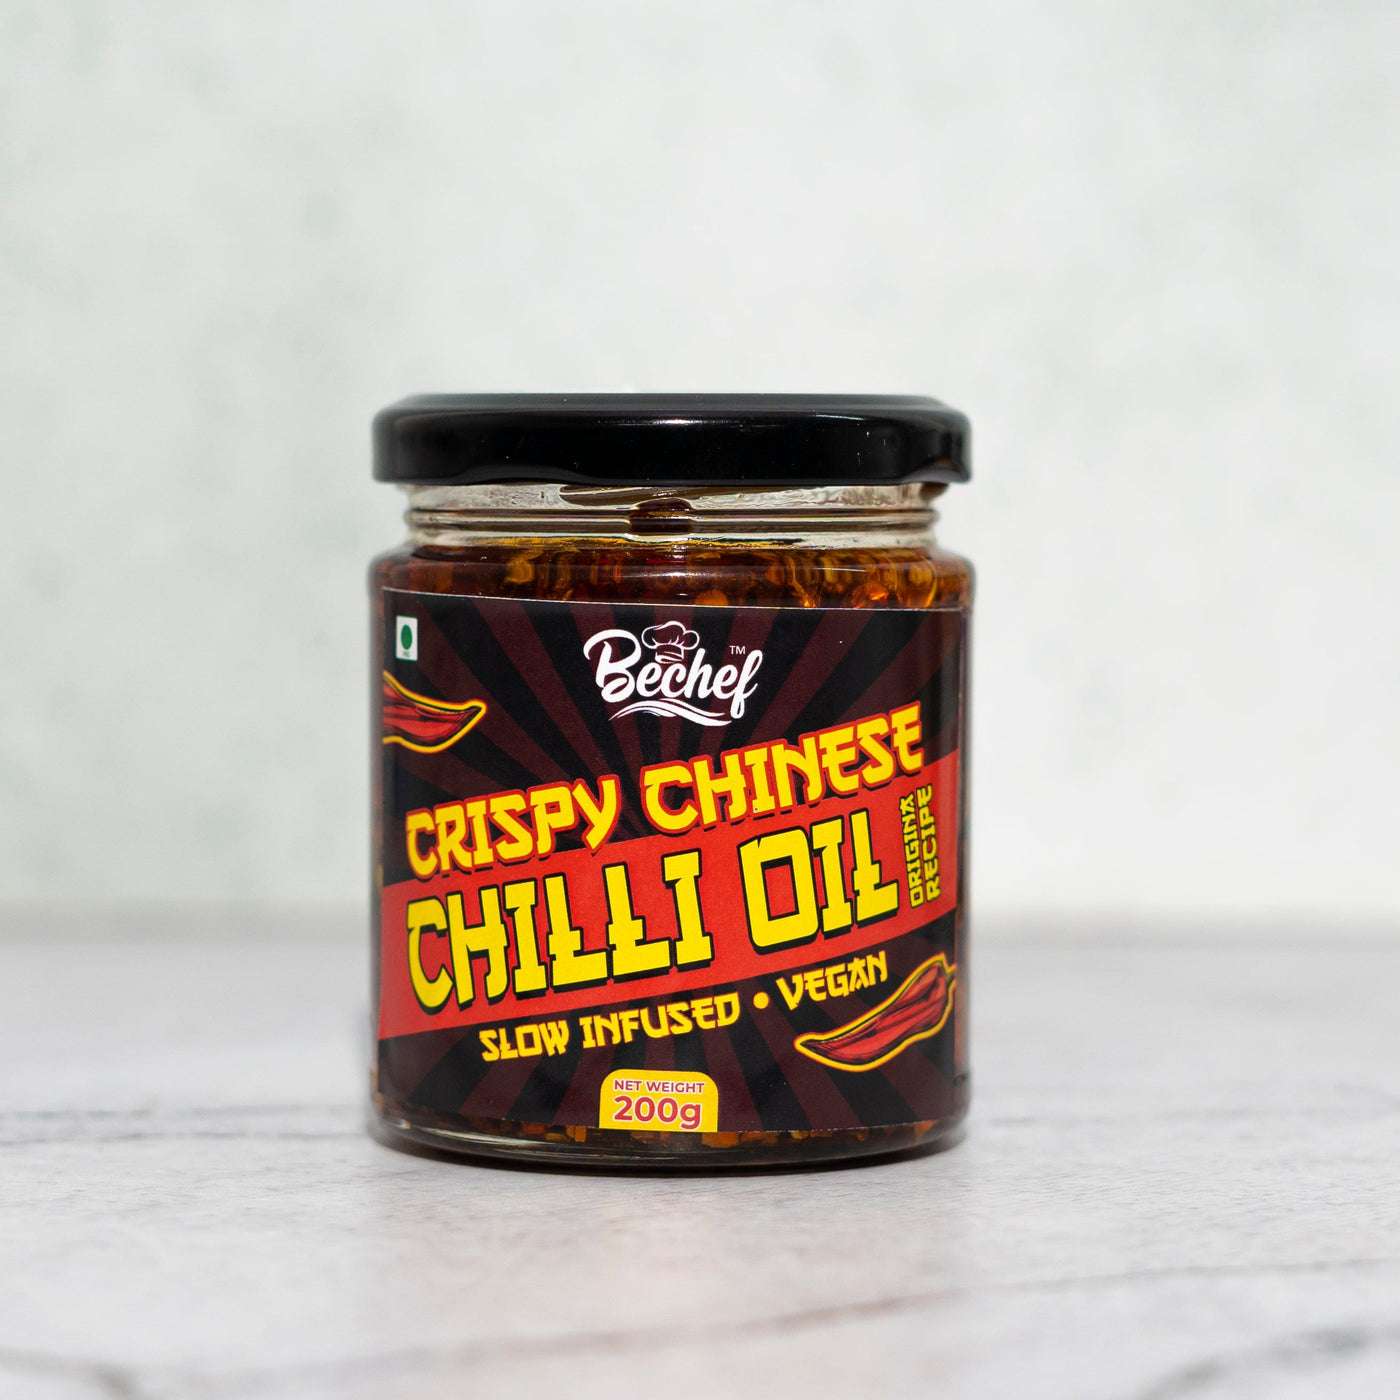 Bechef Crispy Chinese Chili Oil : 200g - Bechef - Gourmet Pantry Essentials